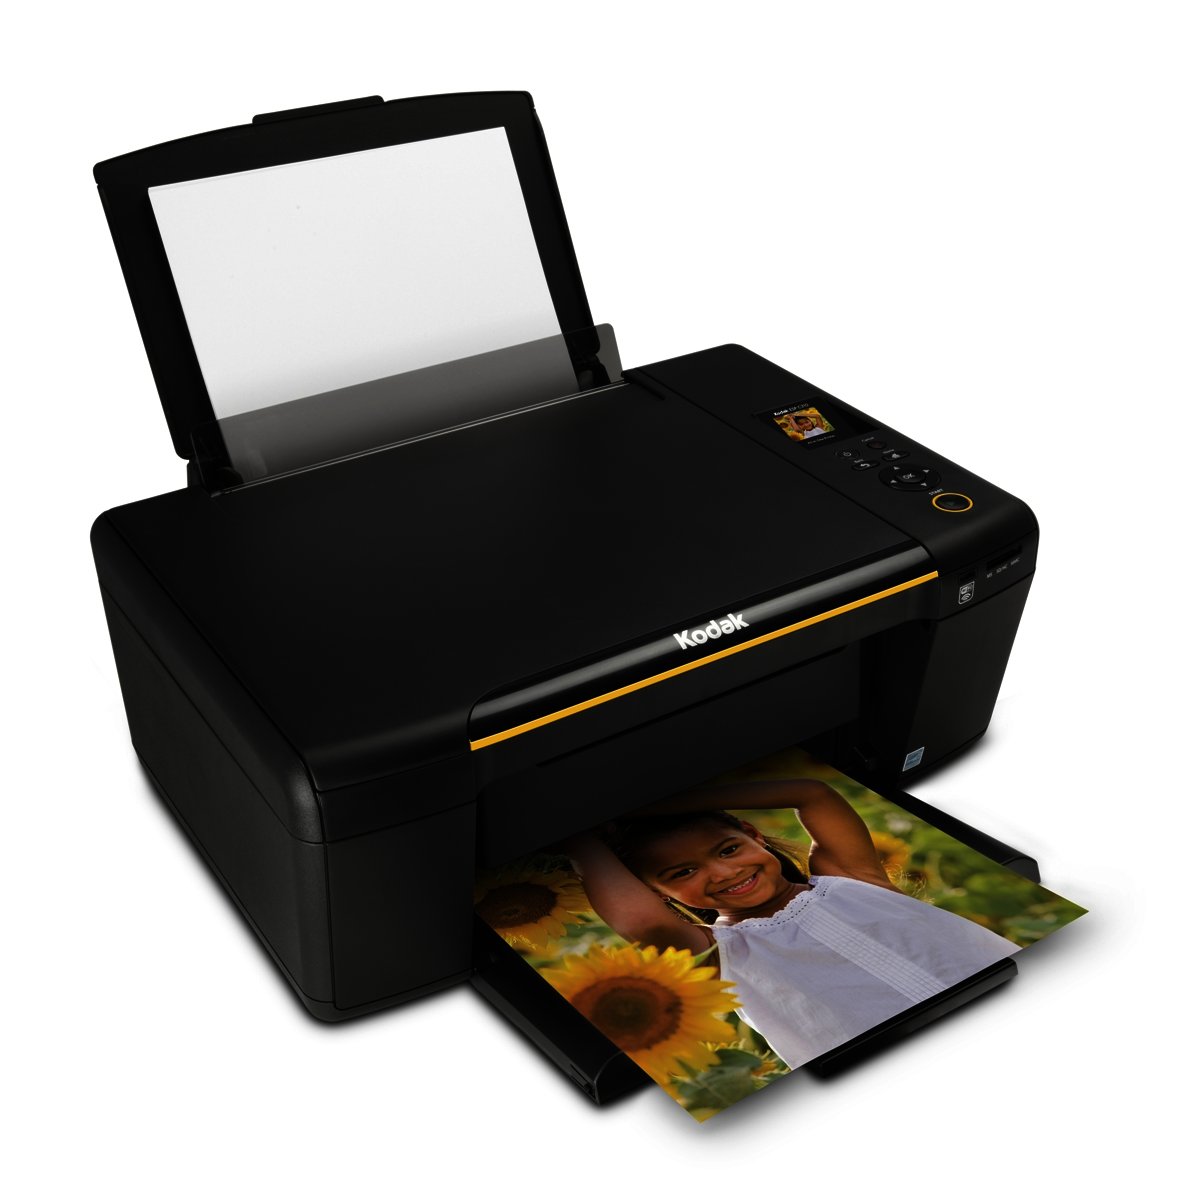 News: Kodak inkjet printers now in South Africa